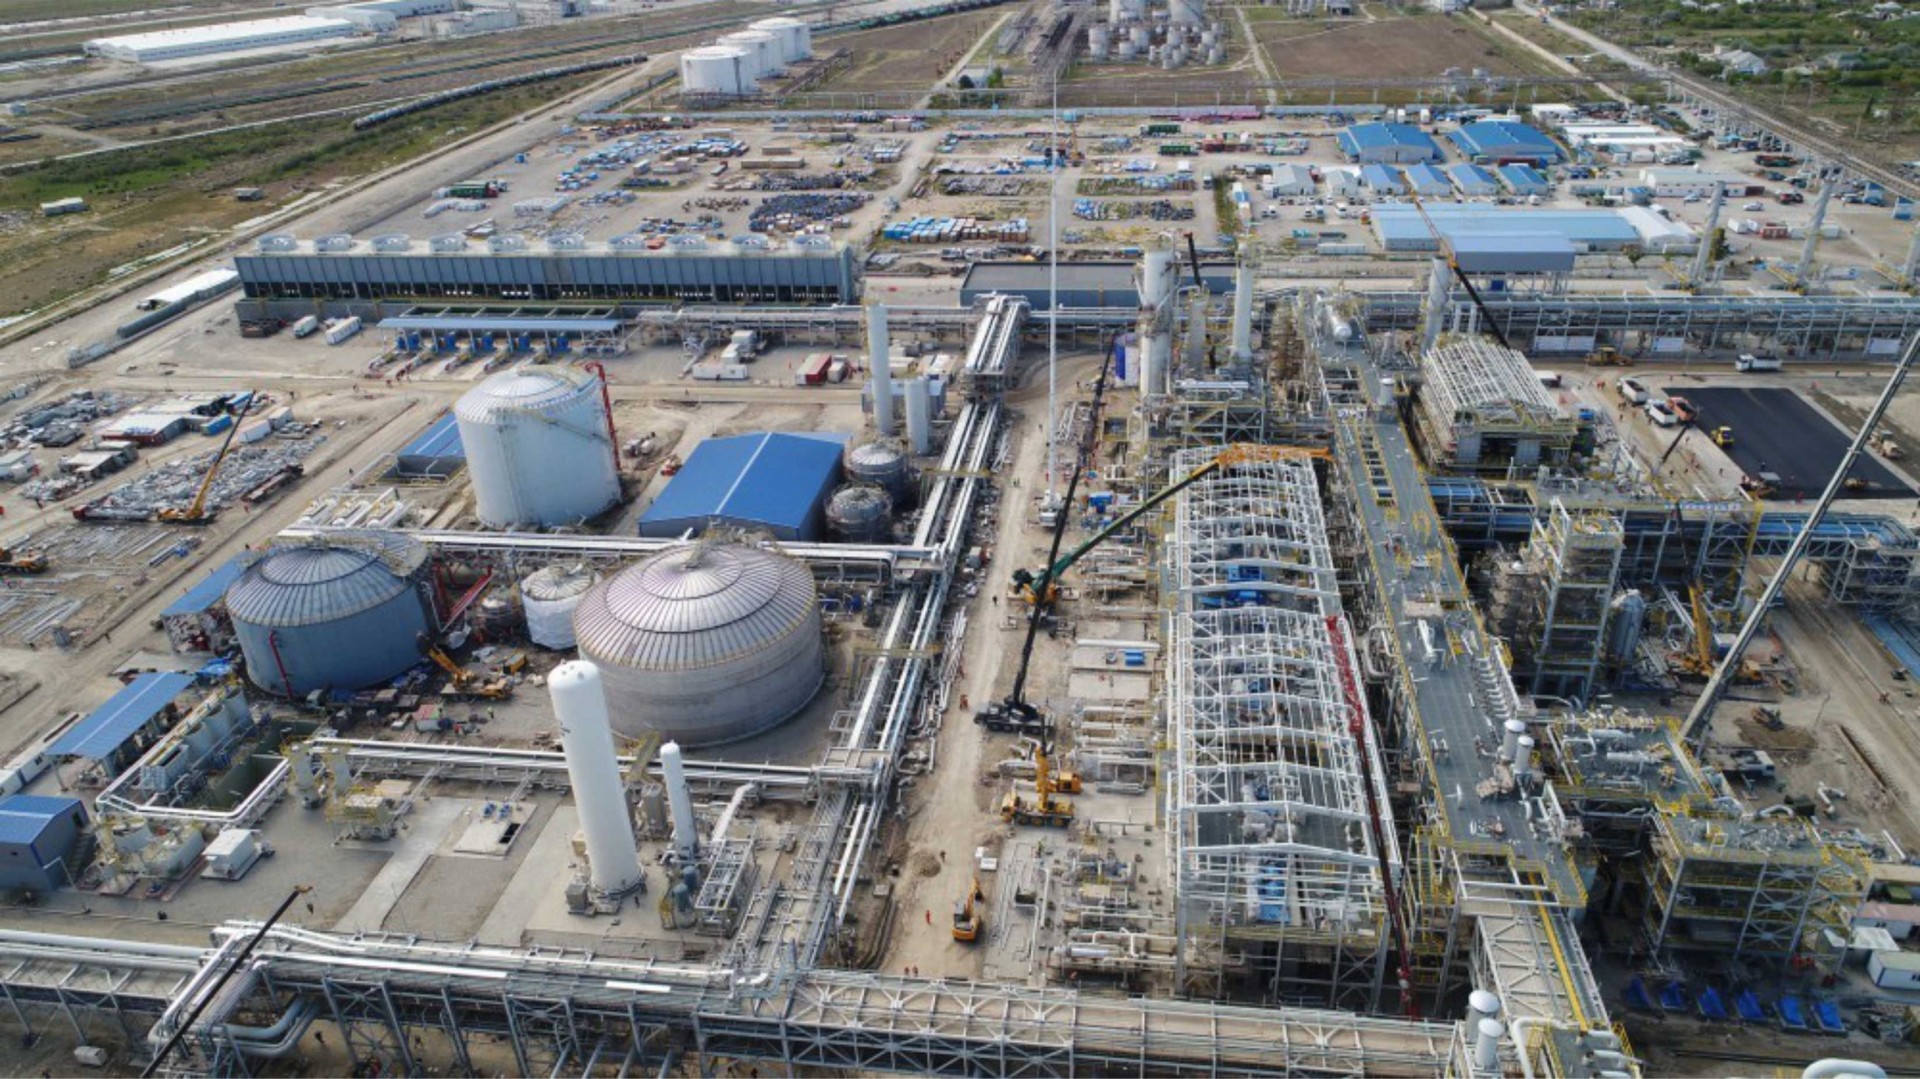 Heydar Aliyev Baku Oil Refinery